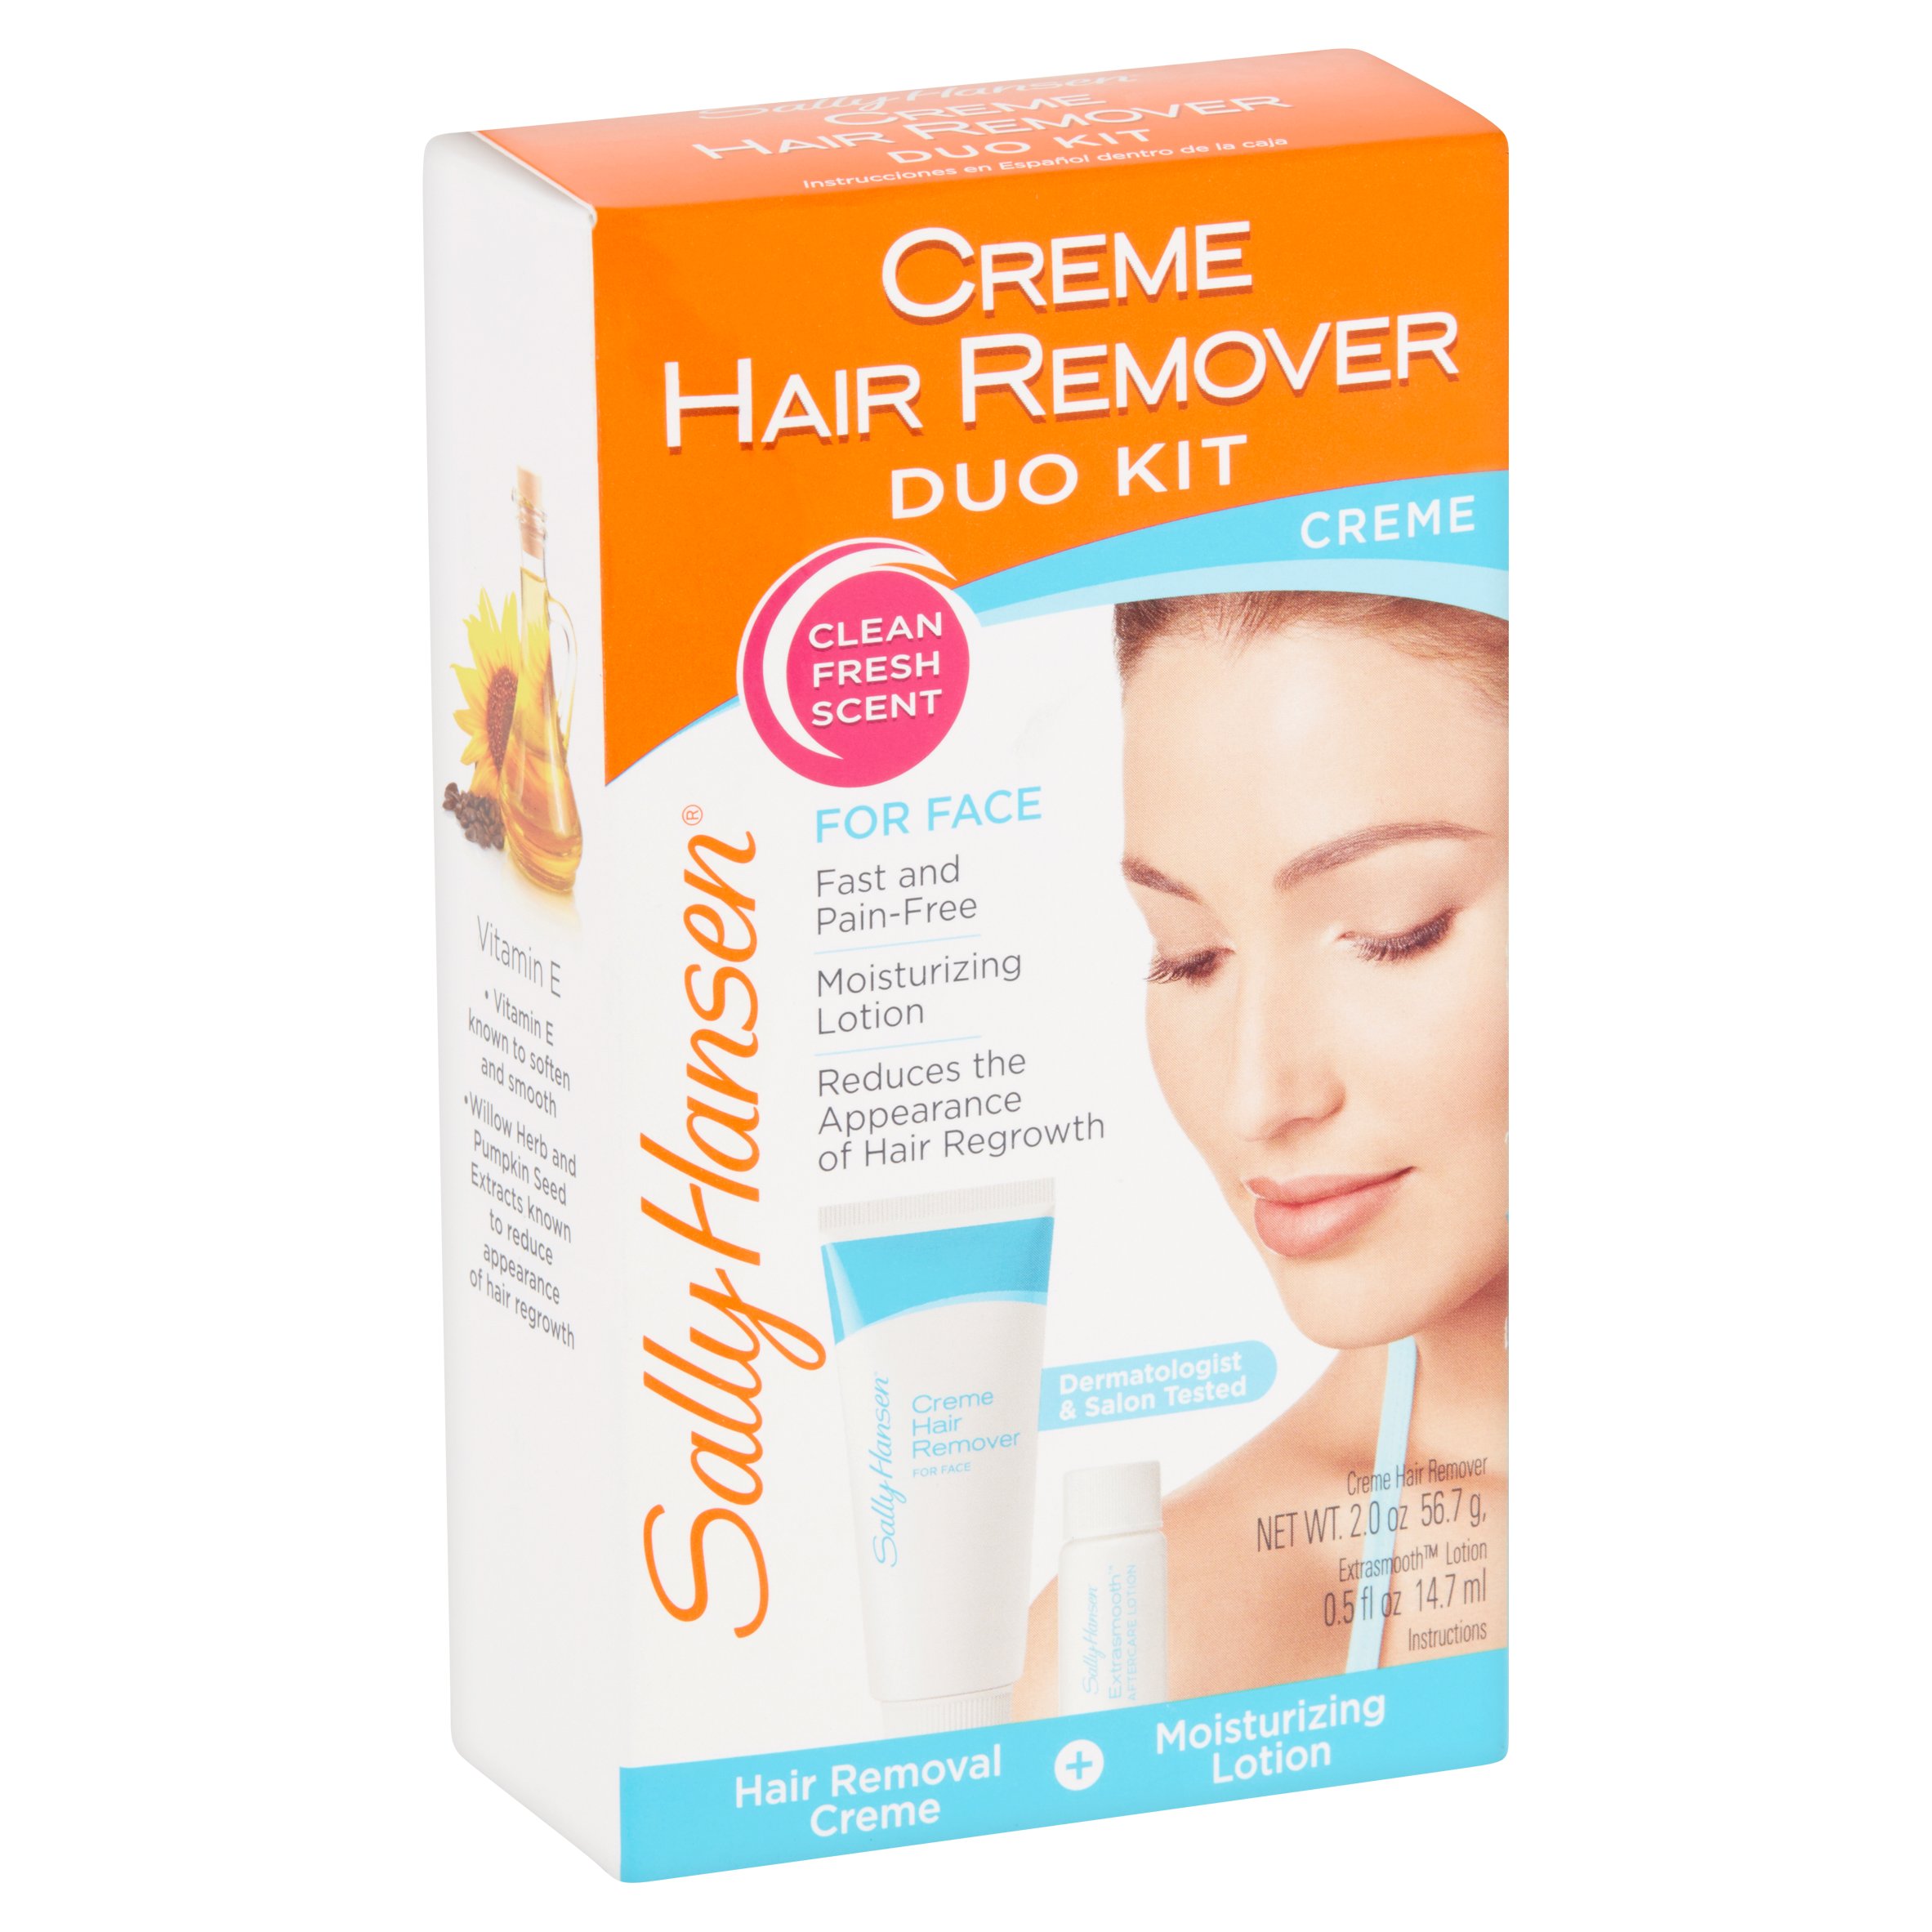 Sally Hansen Creme Hair Remover Kit for Face, 2.5 Oz. - image 2 of 6